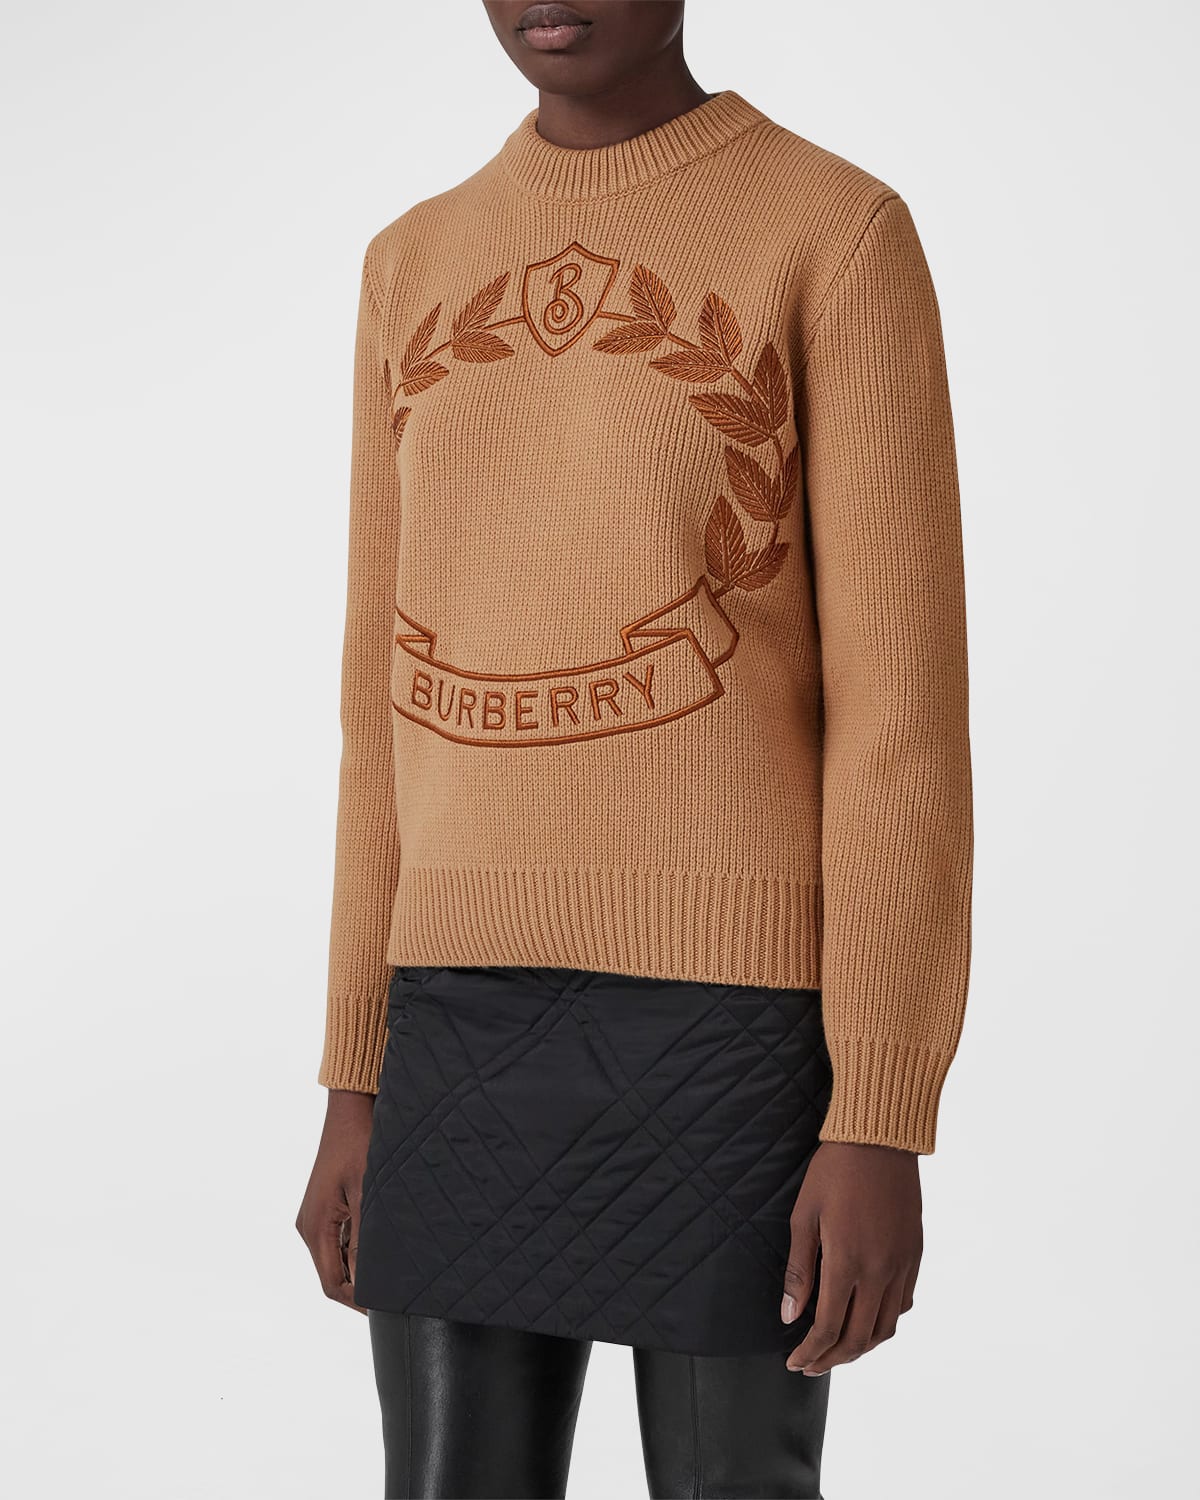 Burberry Sweater | Neiman Marcus